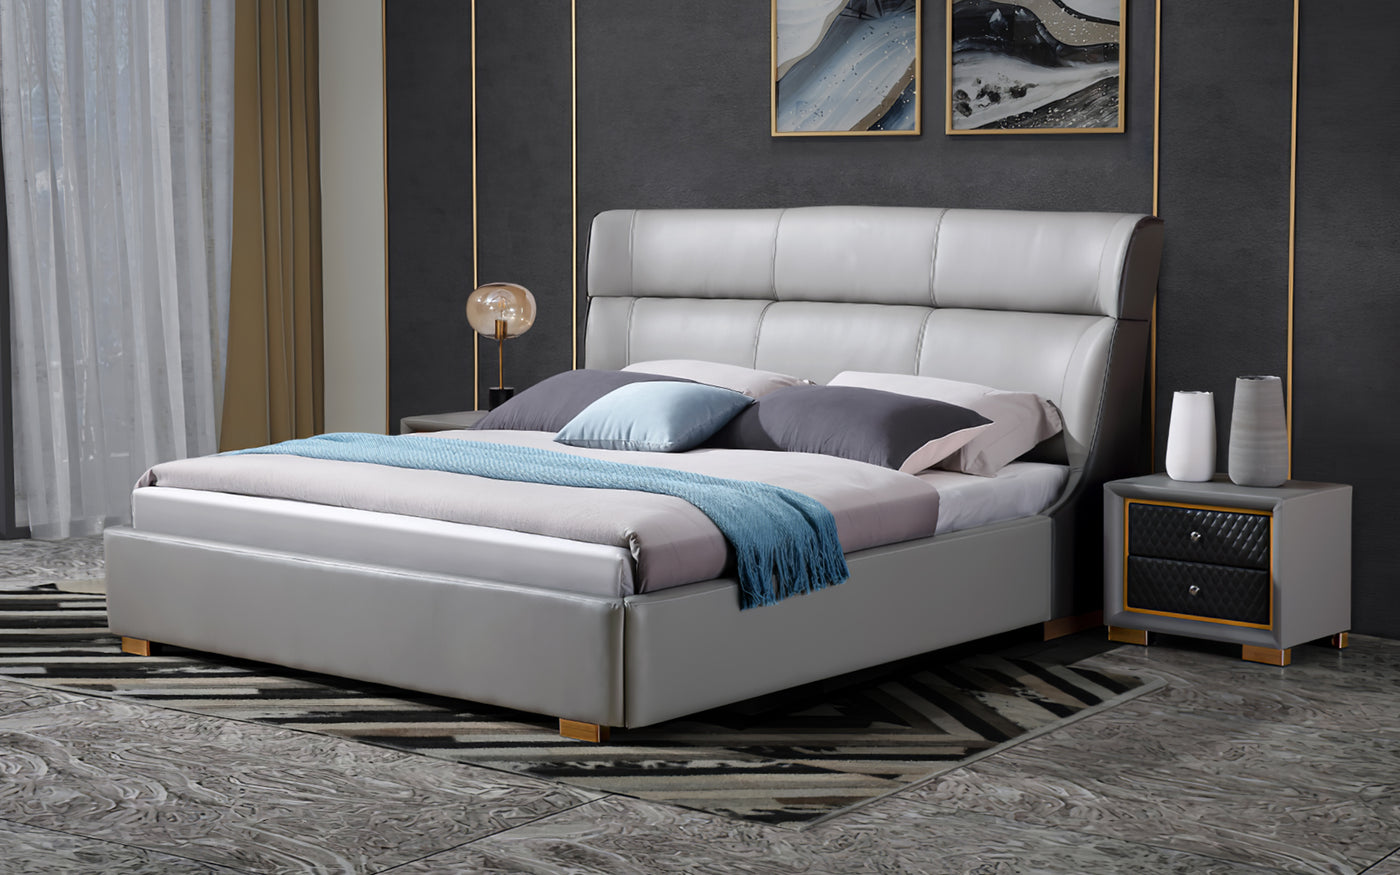 LV Bedding Sets Duvet Cover Lv Bedroom Sets Luxury Brand Bedding V7